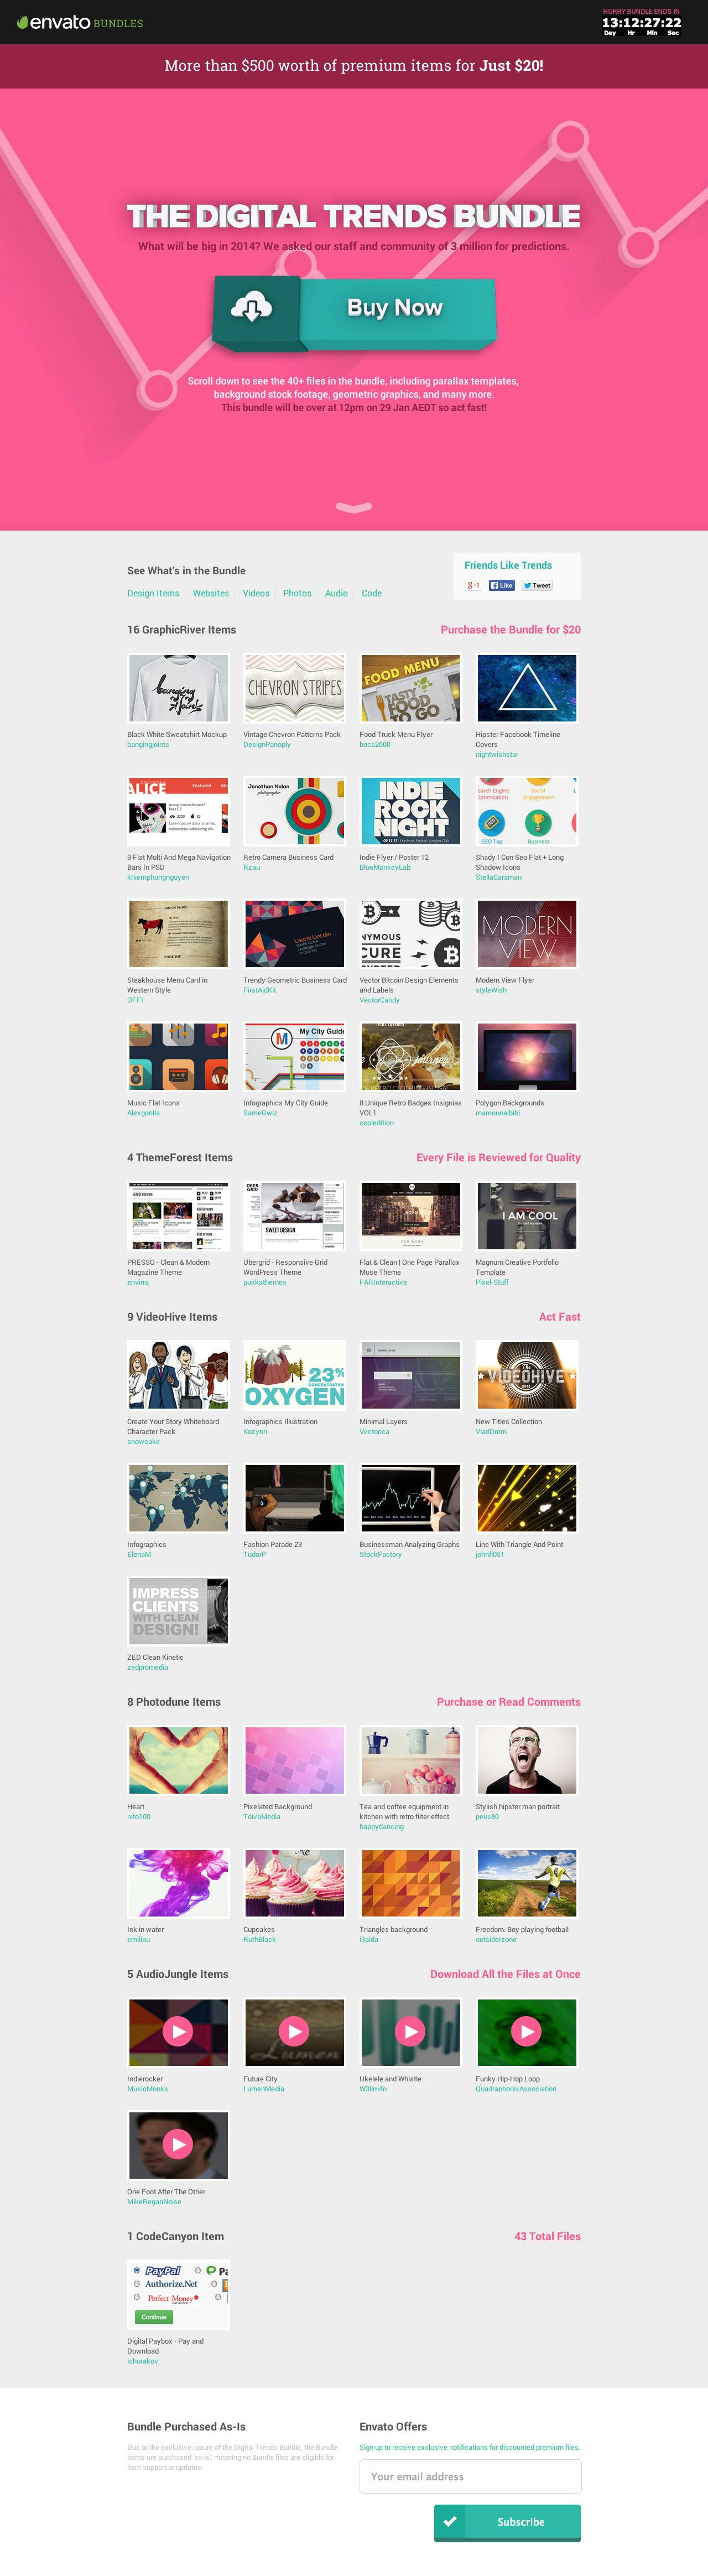 The Digital Trends Bundle Website Screenshot